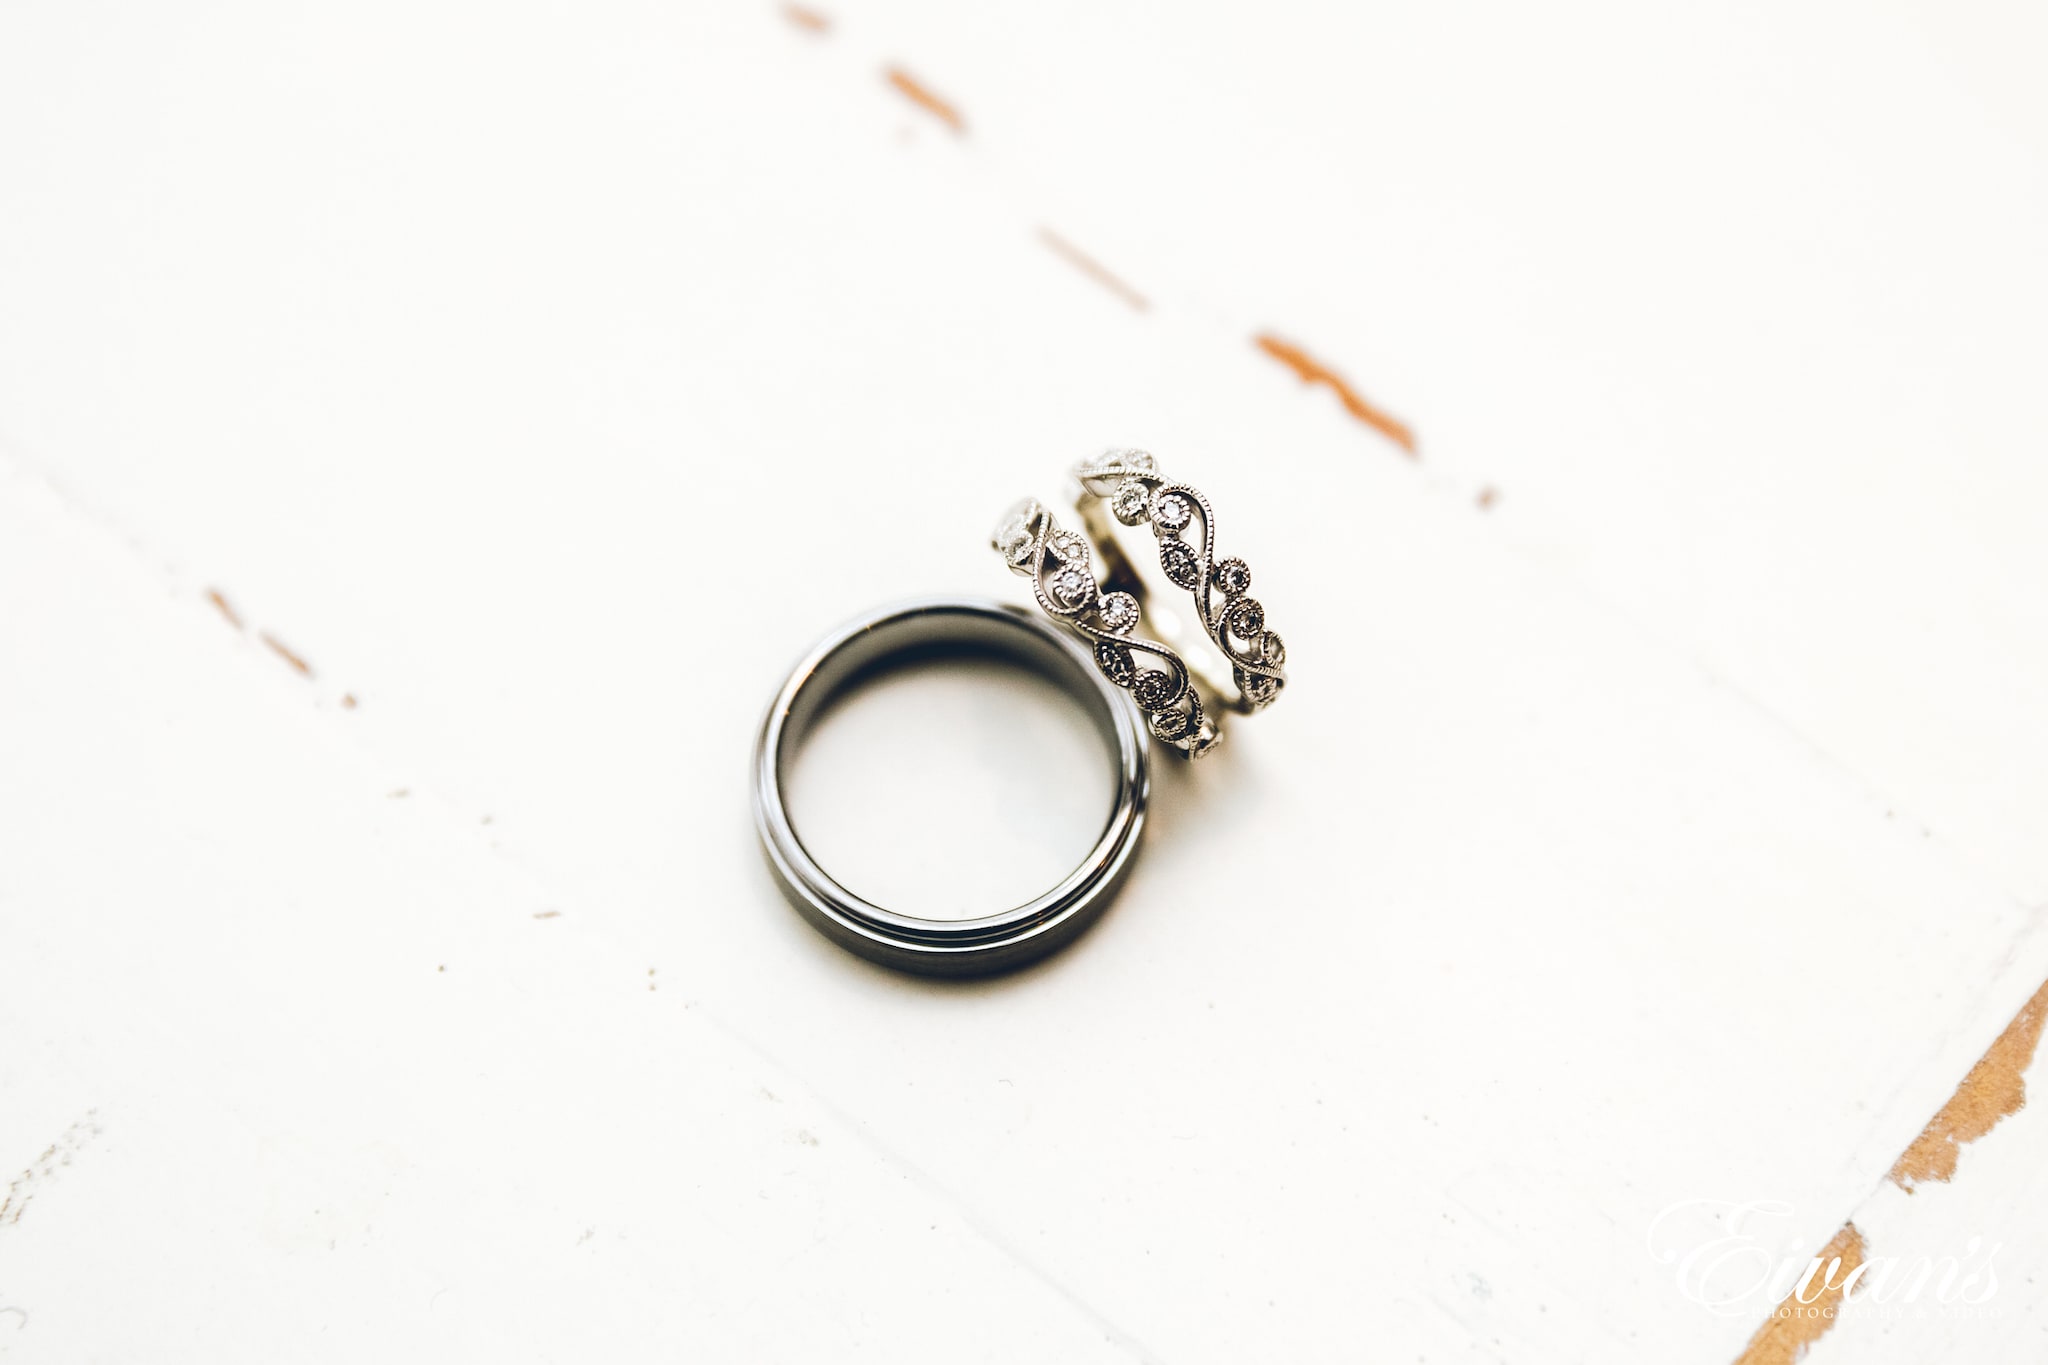 silver ring on white textile